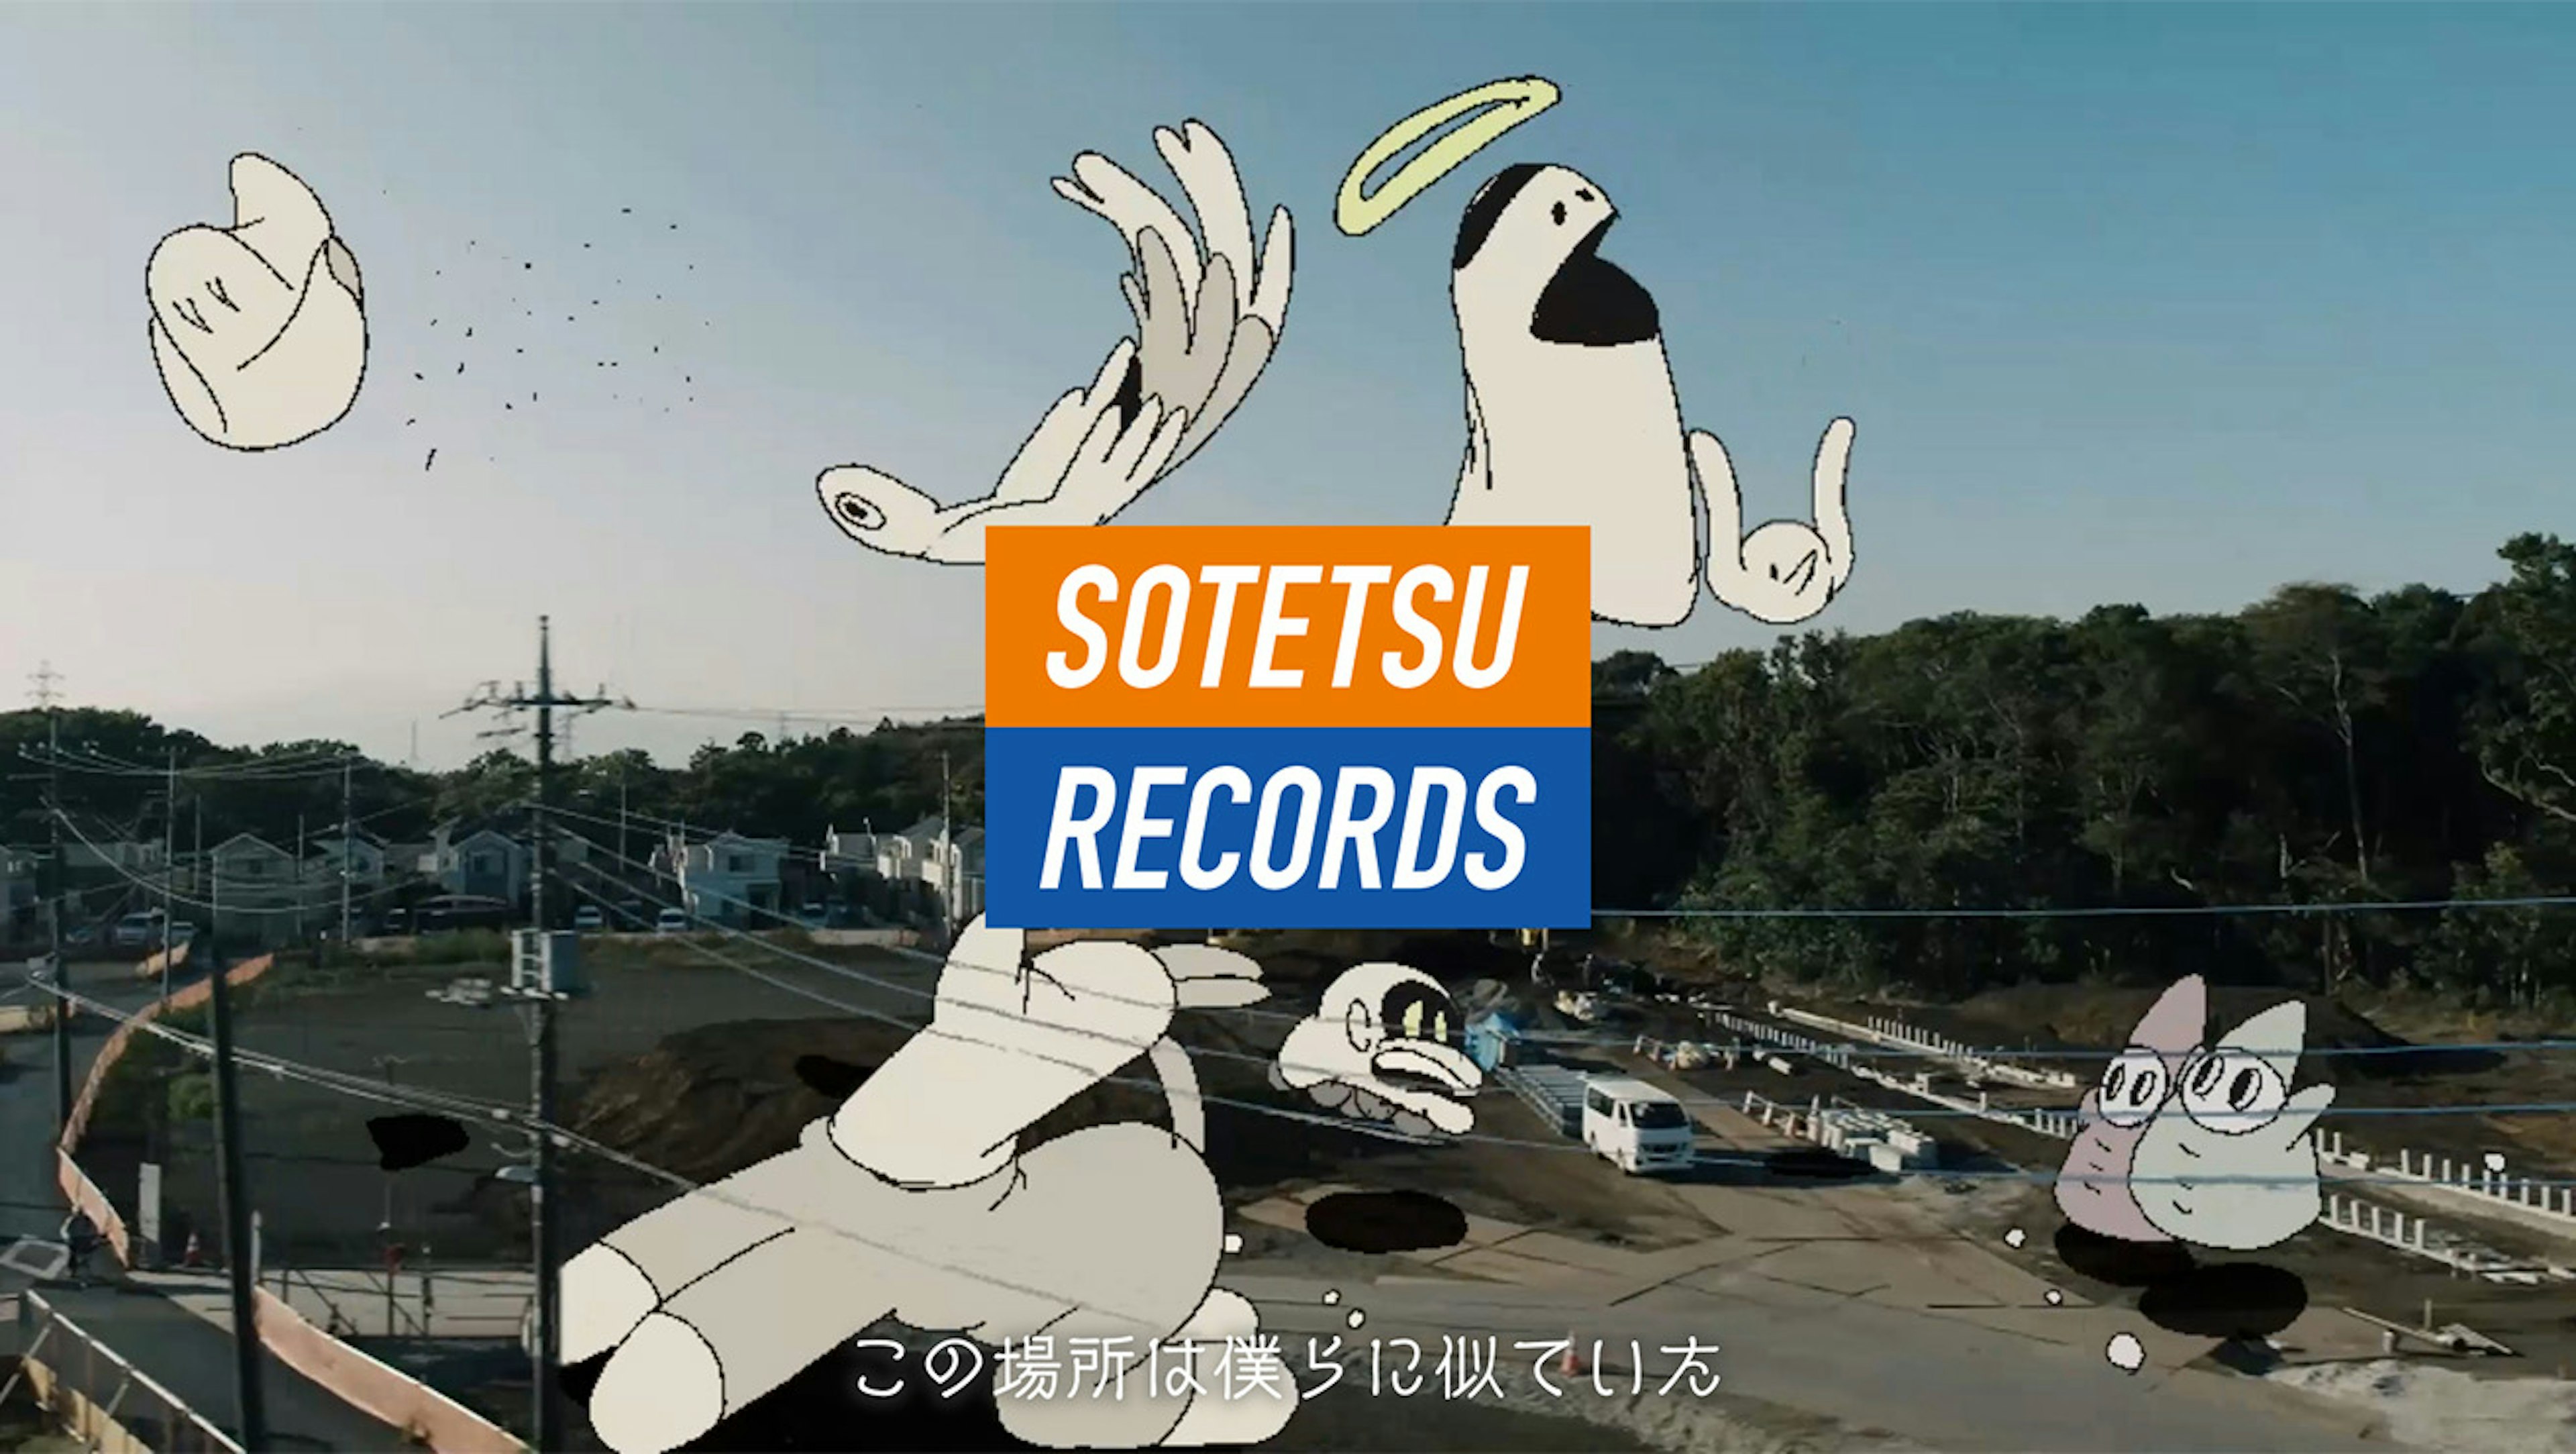 Sotetsu Record Project